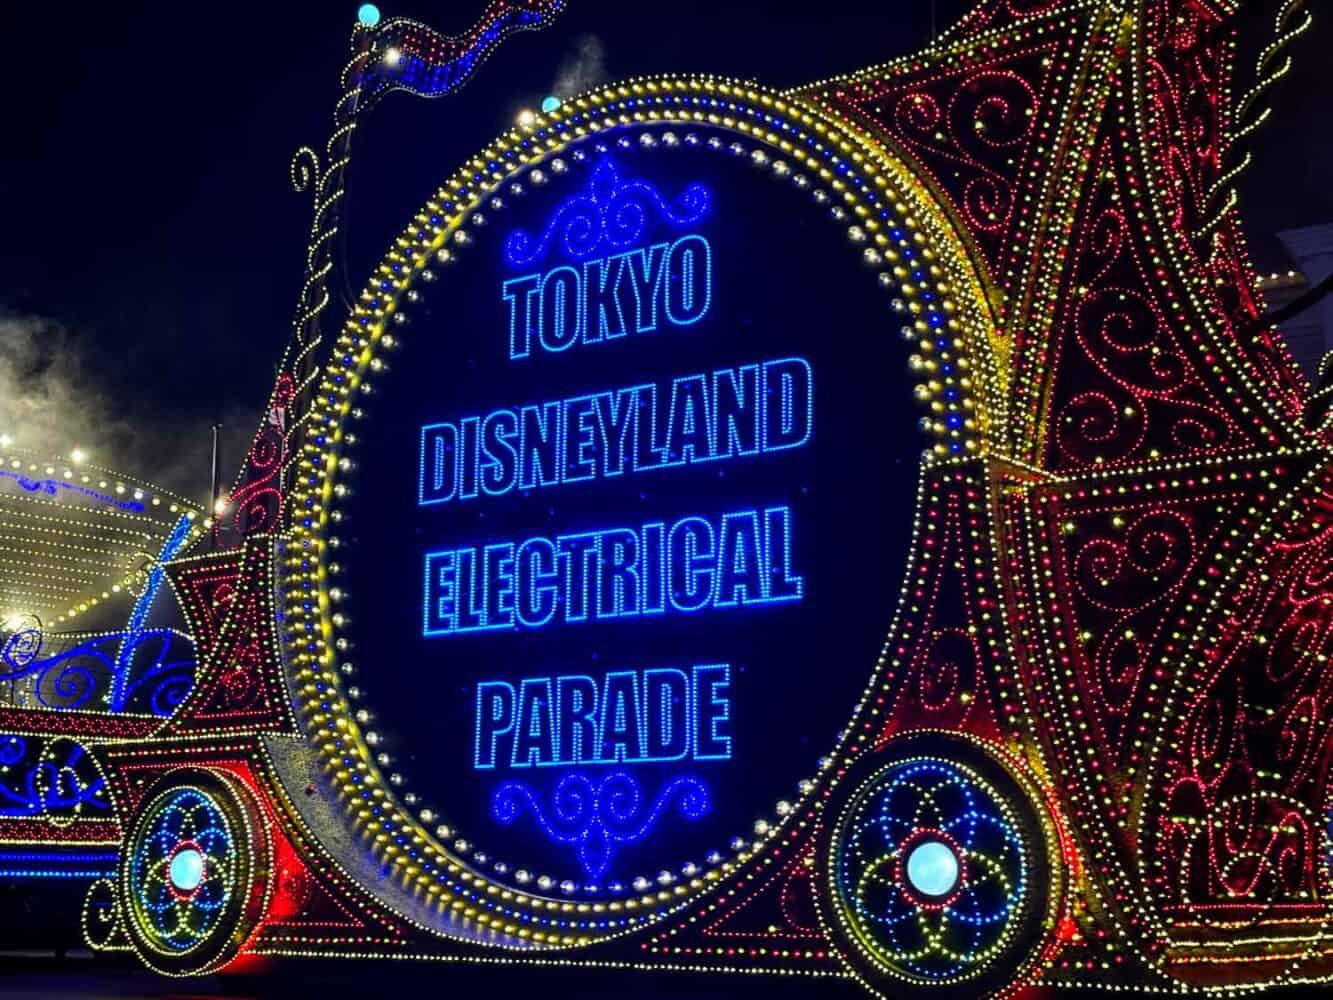 Tokyo Disneyland Electrical Parade show